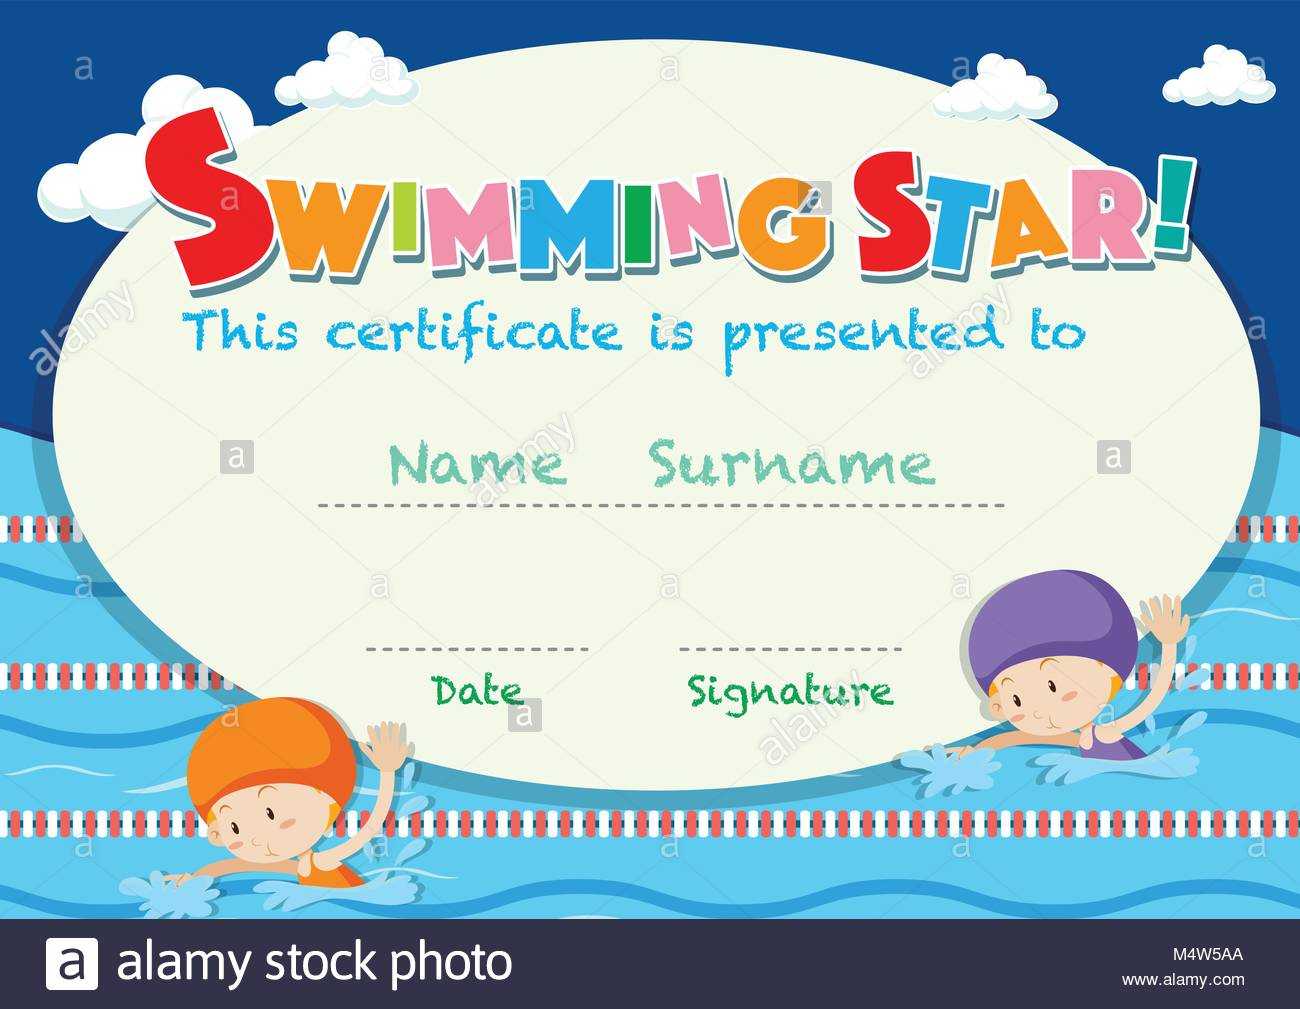 Swimming Certificate Stock Photos & Swimming Certificate With Free Swimming Certificate Templates